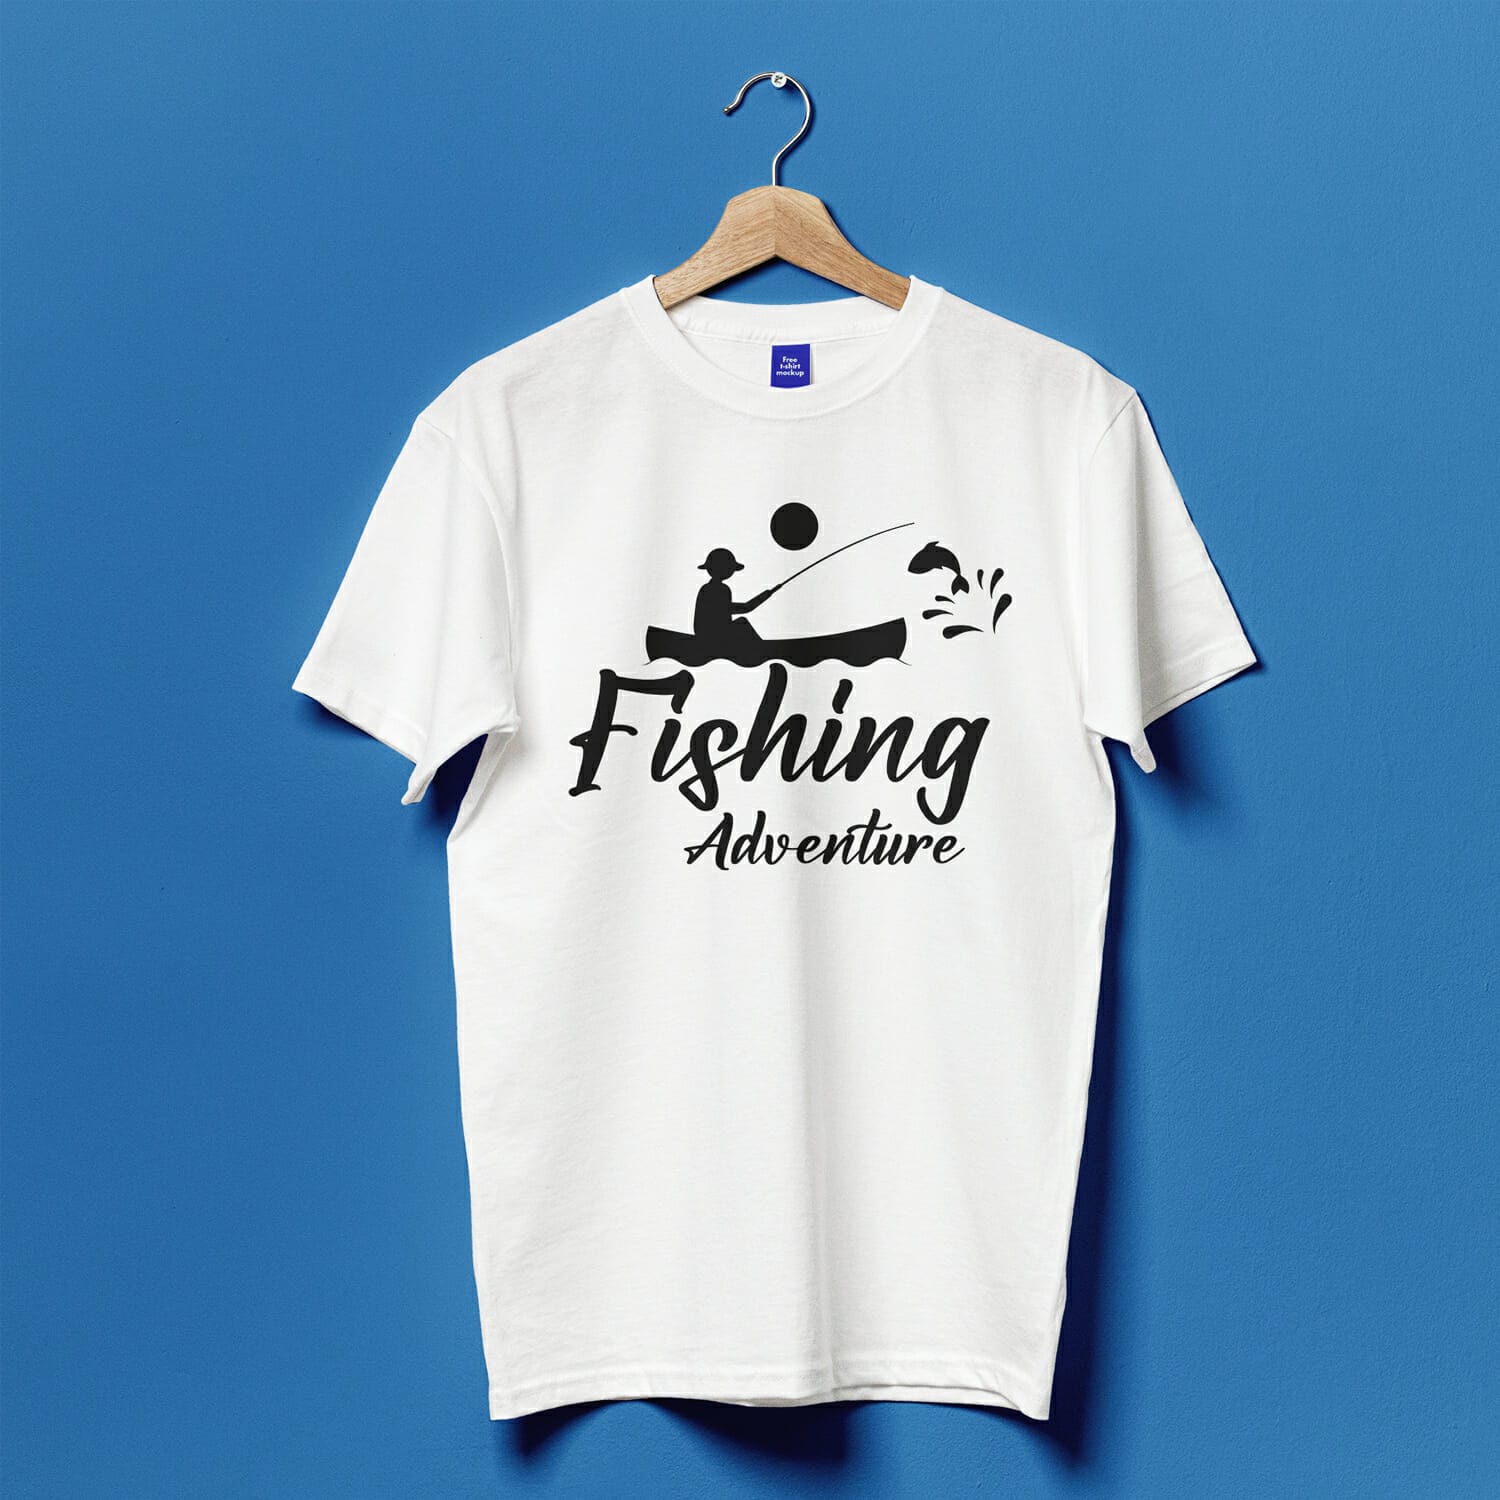 Fishing Adventure T-shirt Design